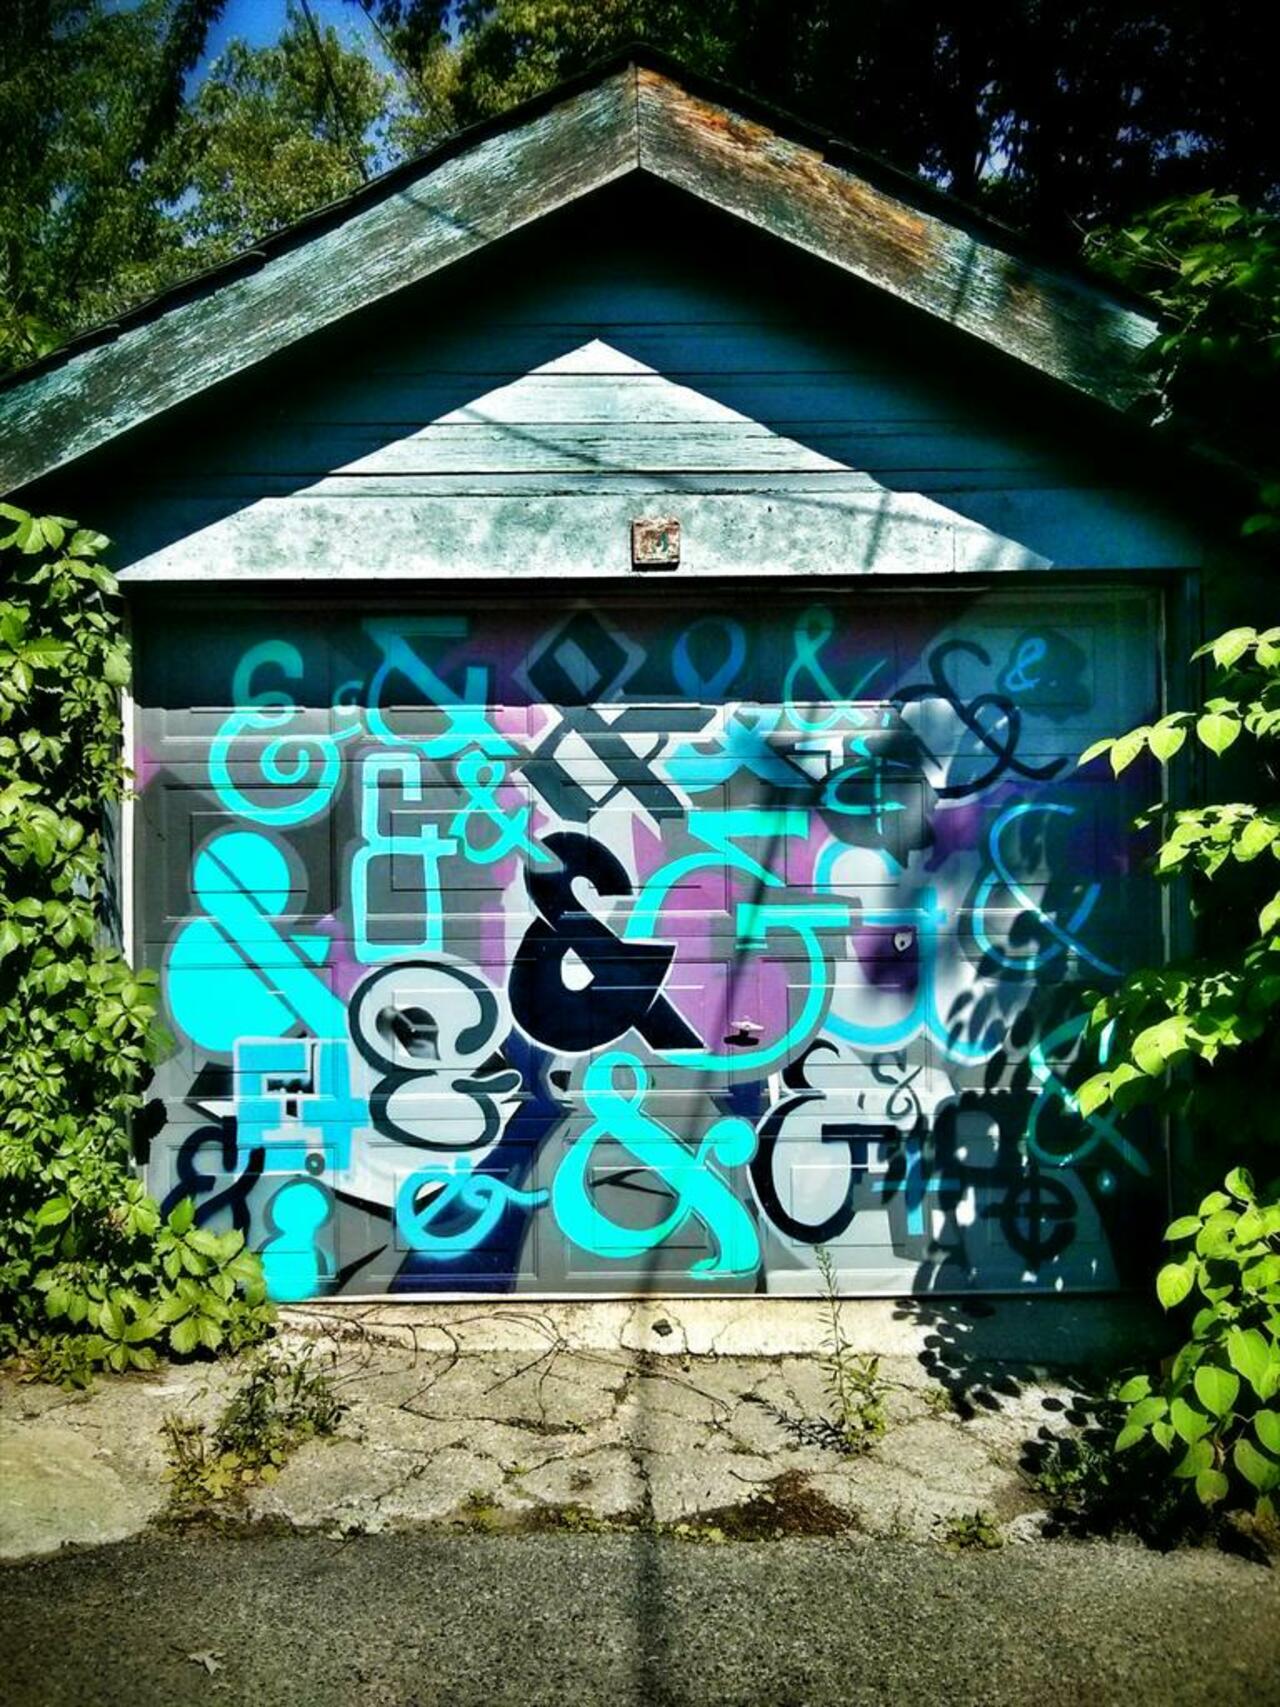 Ampersand.
#streetart #urbanart #graffiti http://t.co/T21E9mc8zO